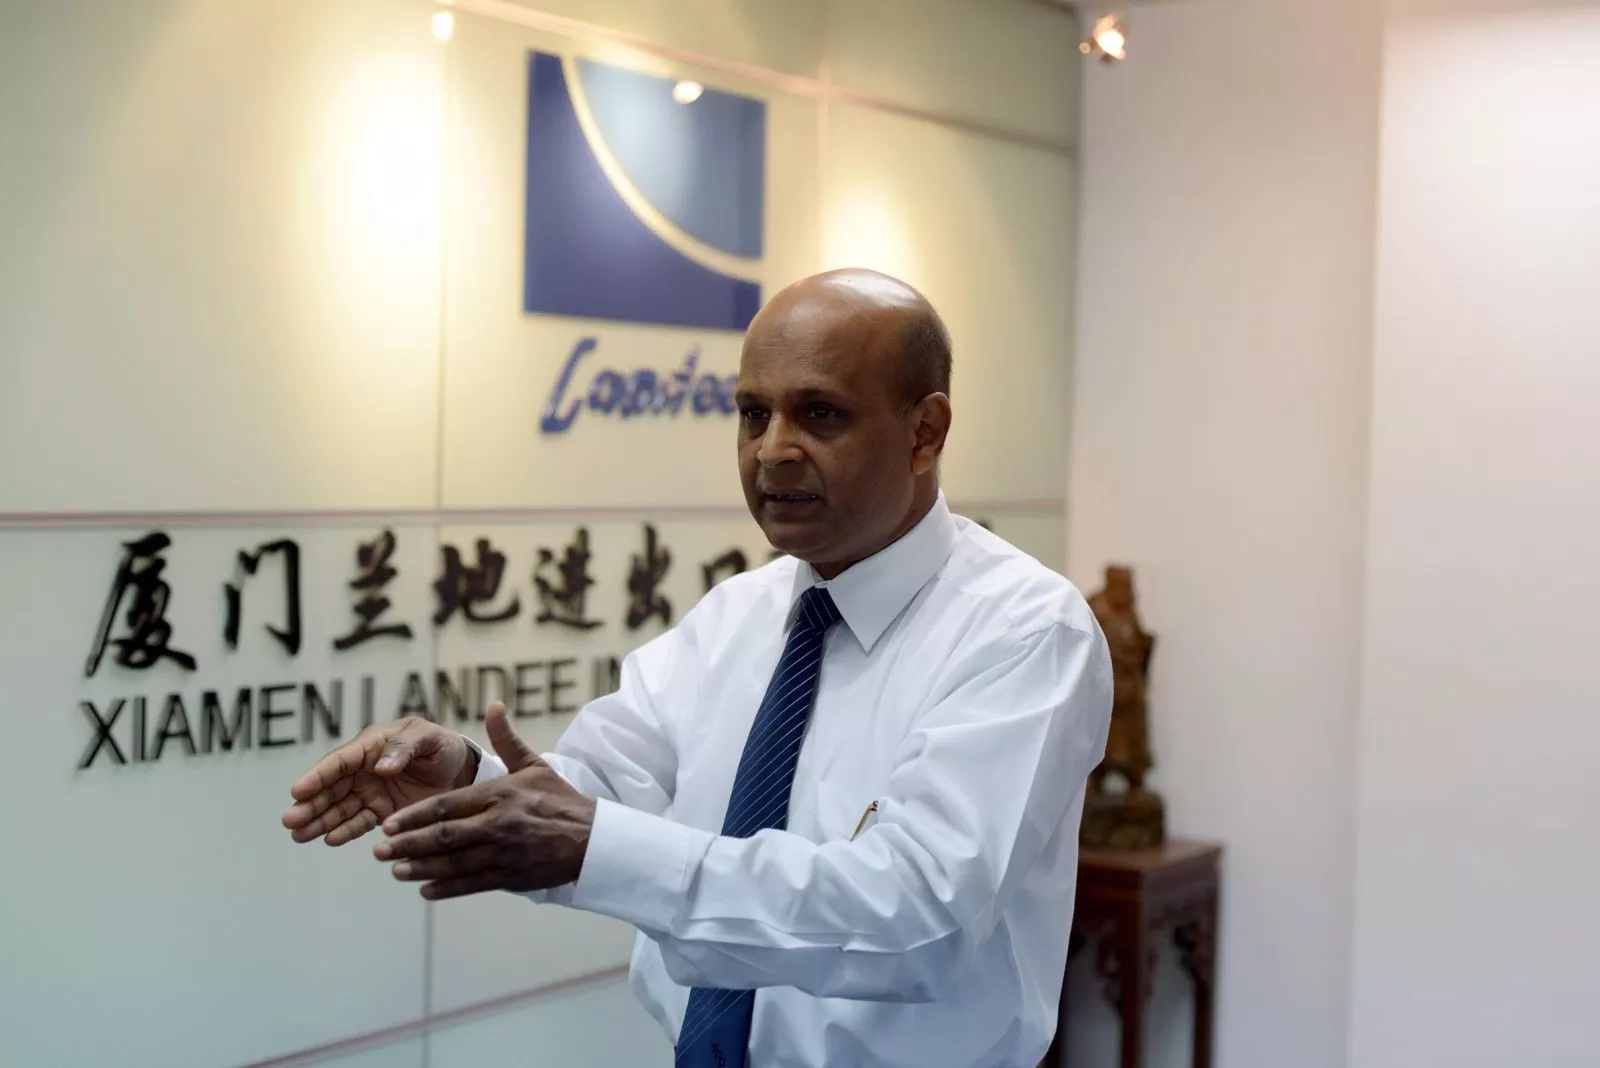 Sri Lanka client Mr Rsd Visits Landee International Sales Centre